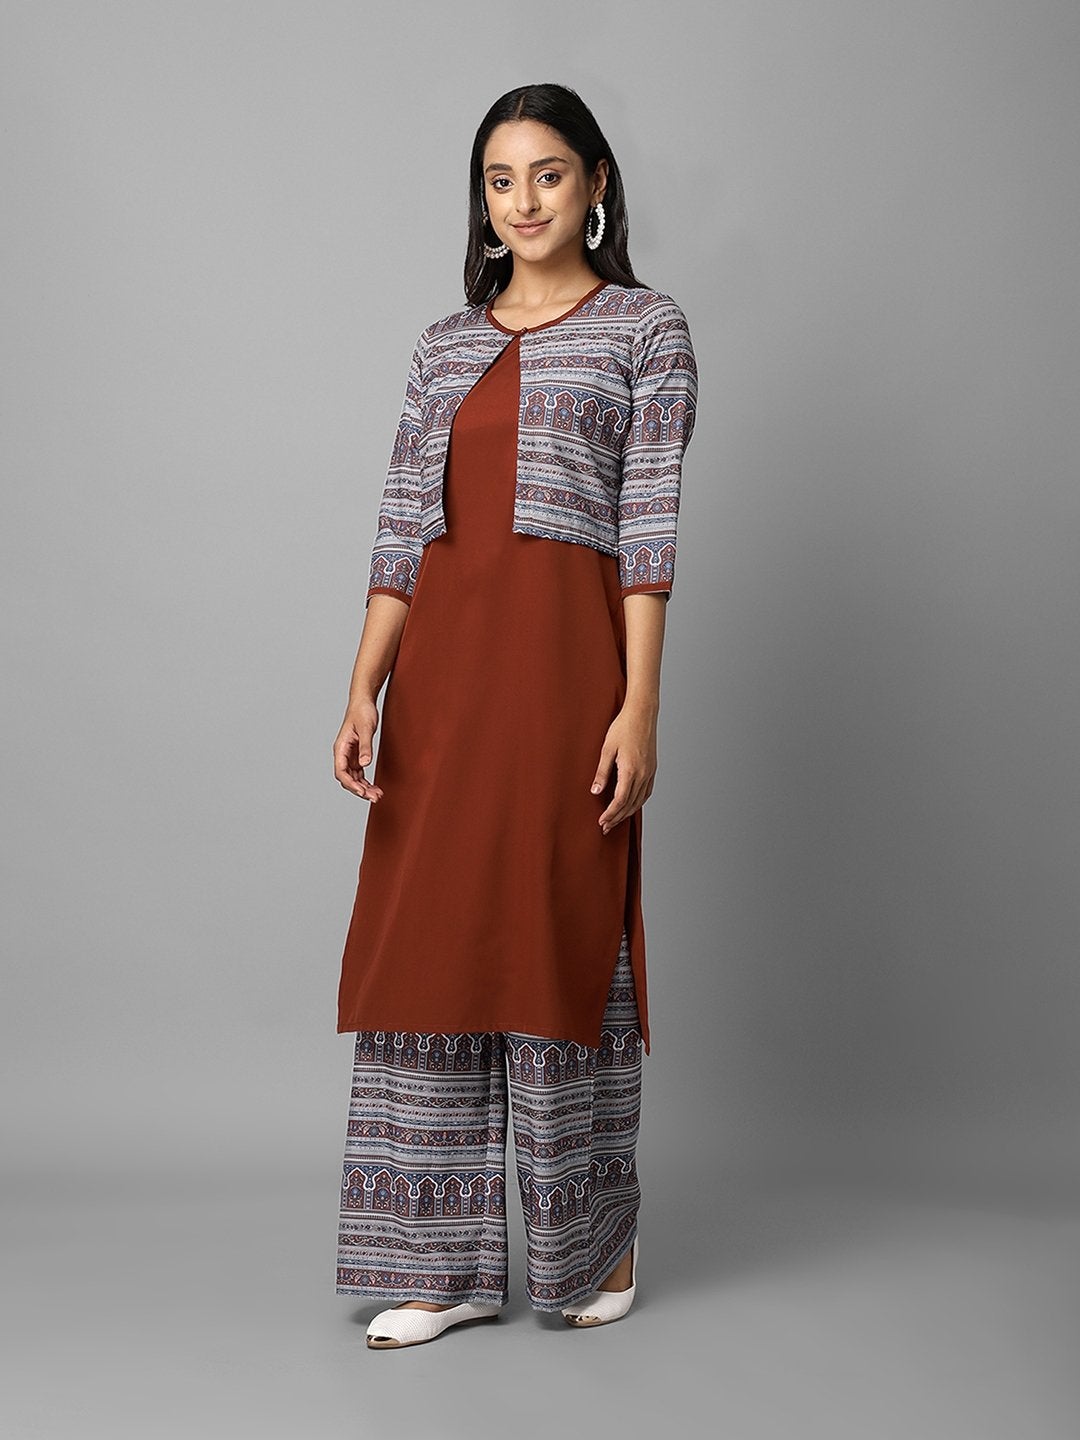 Women's Rust And Grey Ethnic Printed Side Slit Straight Jacket Style Kurta Palazzo Set - Azira